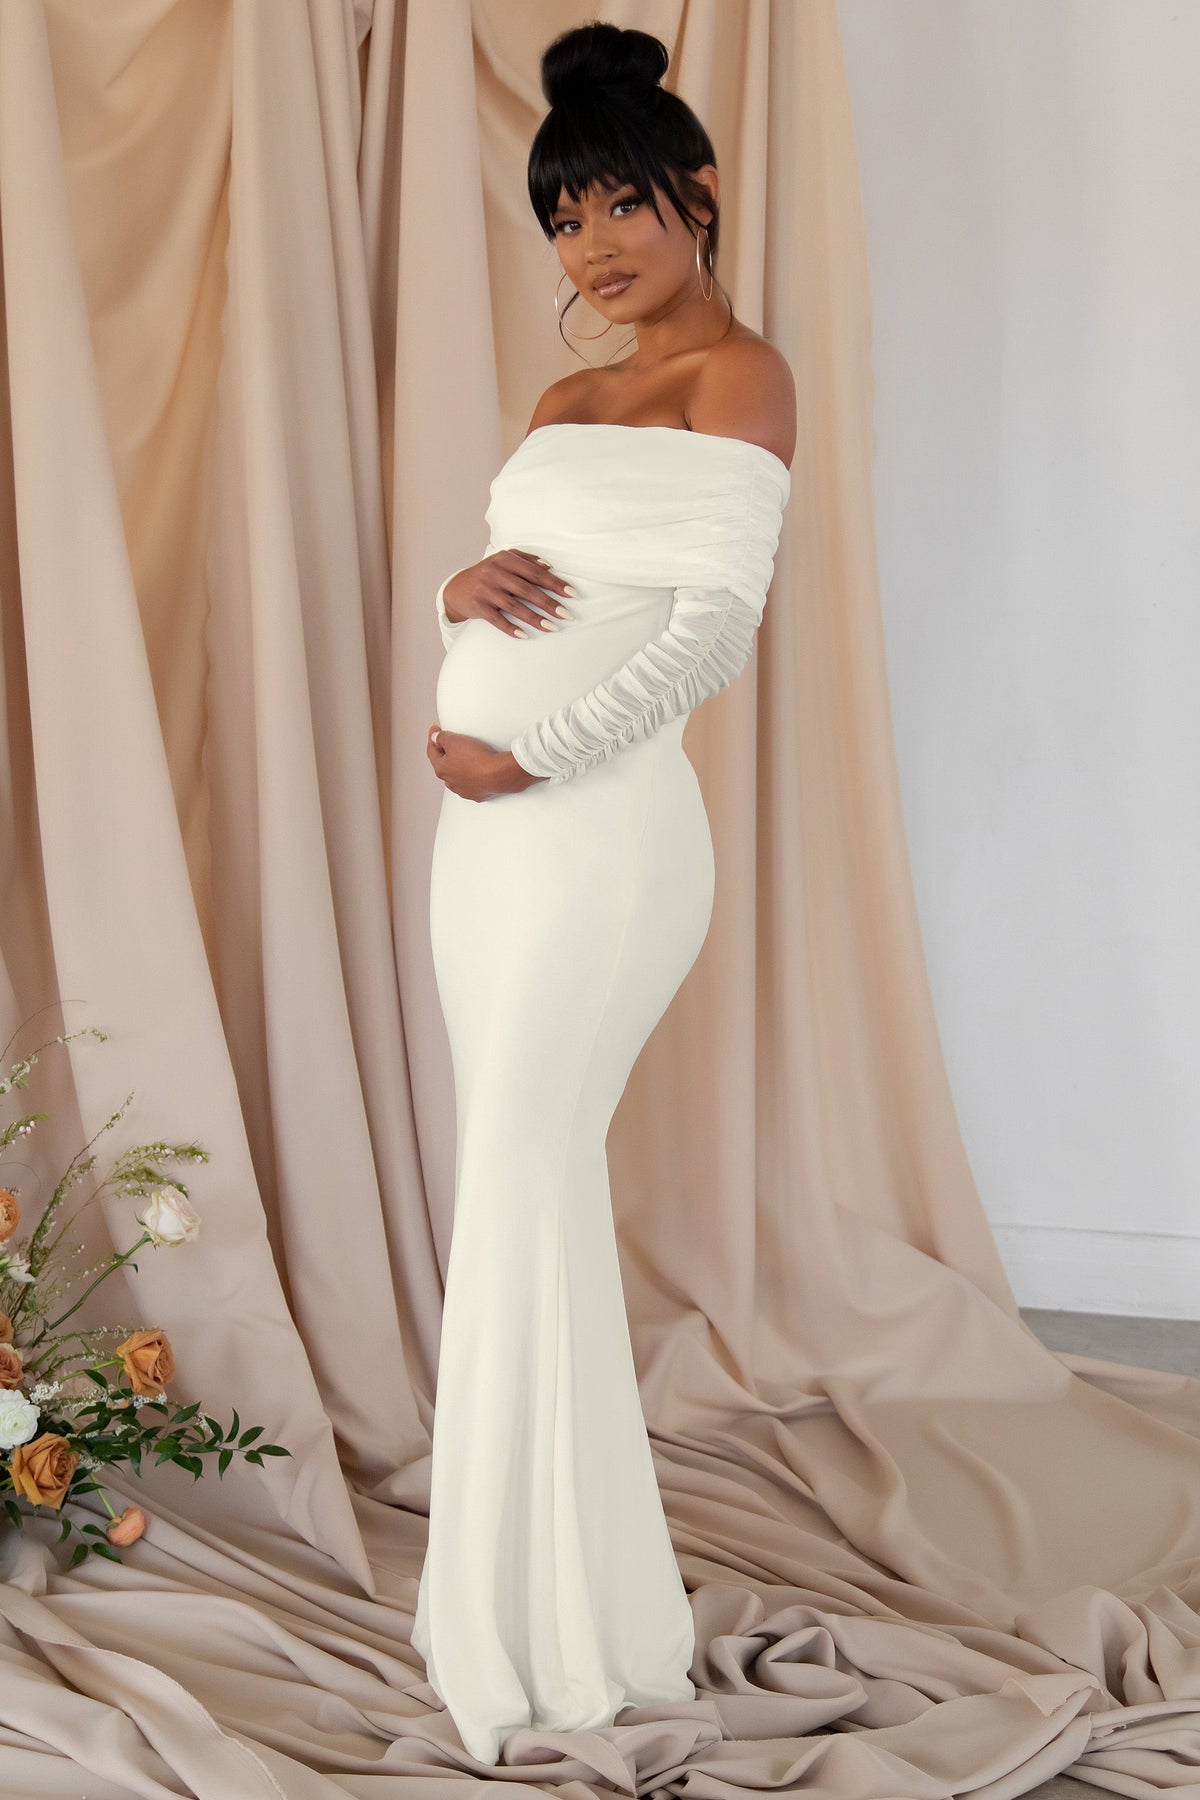 Loving Comfort Maternity Support, White, Large (Dress size 17-20